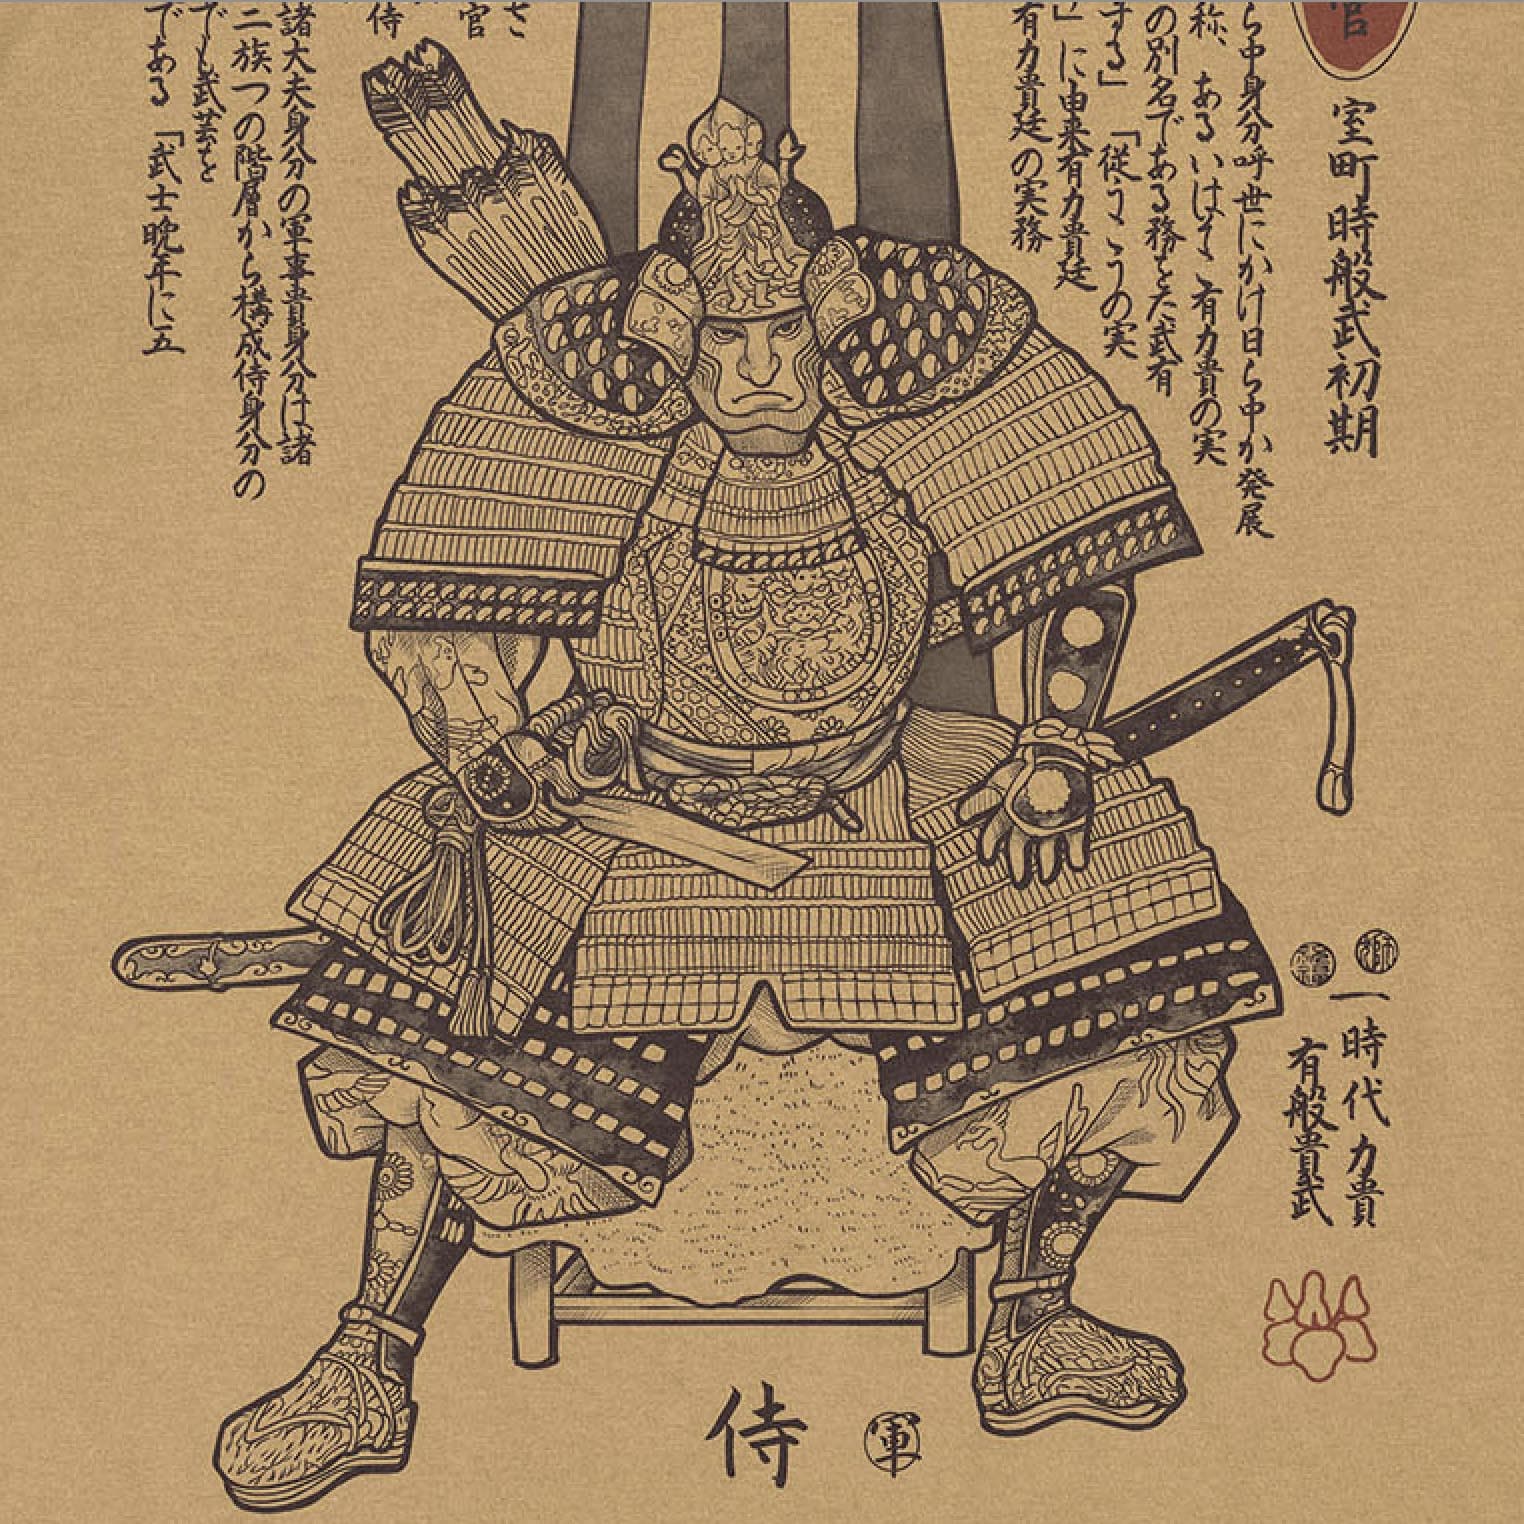 DTG T-Shirt S / Old Gold Kuniyoshi's Oda Nobunaga Ronin Japanese Samurai Antique Ukiyo-e Edo Warrior Design T-Shirt